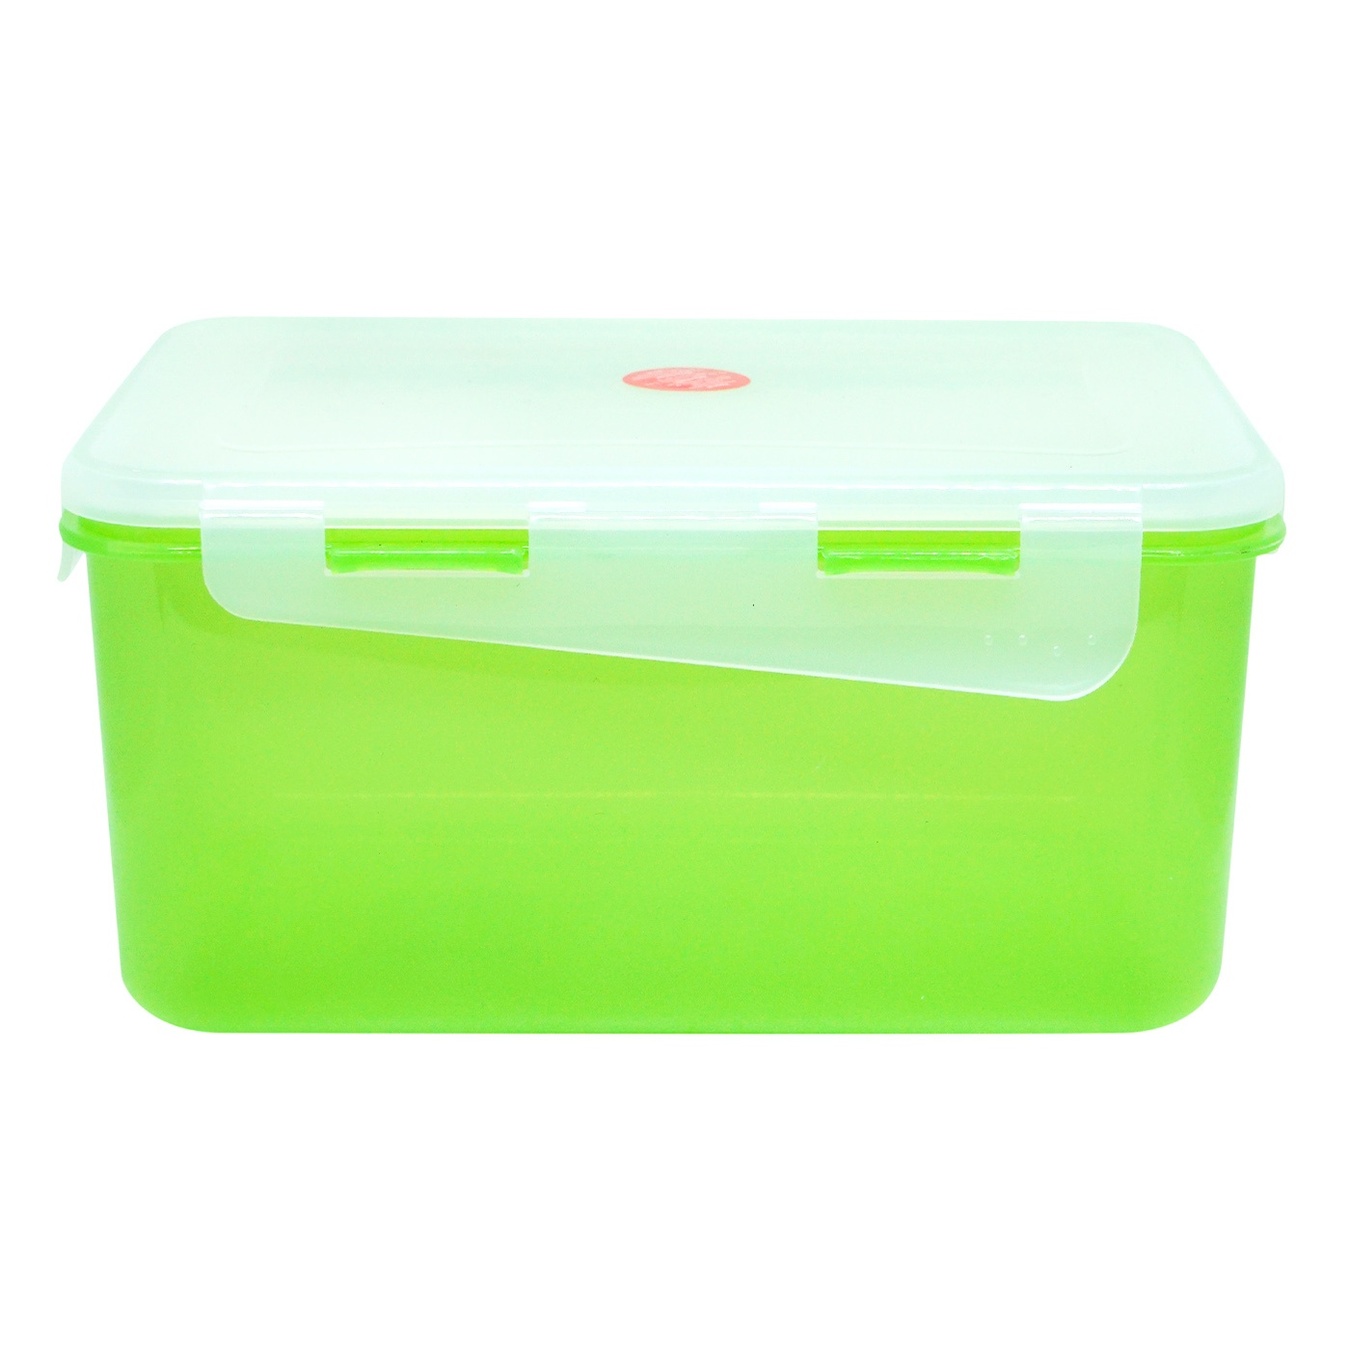 Universal container Fiesta Aleana rectangular green/transparent 2.5 l